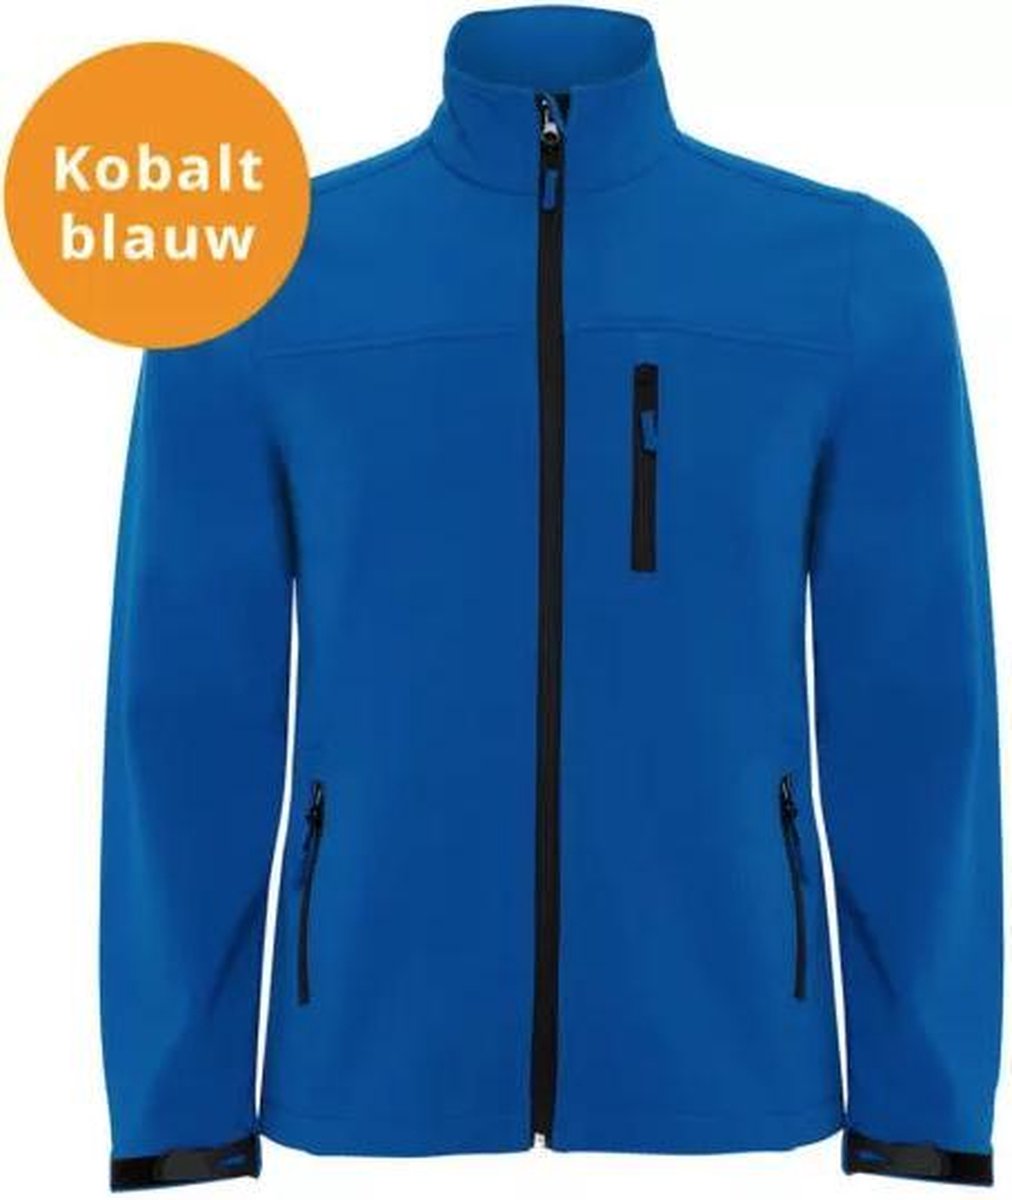 Softshell jas heren - maat M - Kobalt blauw | bol.com